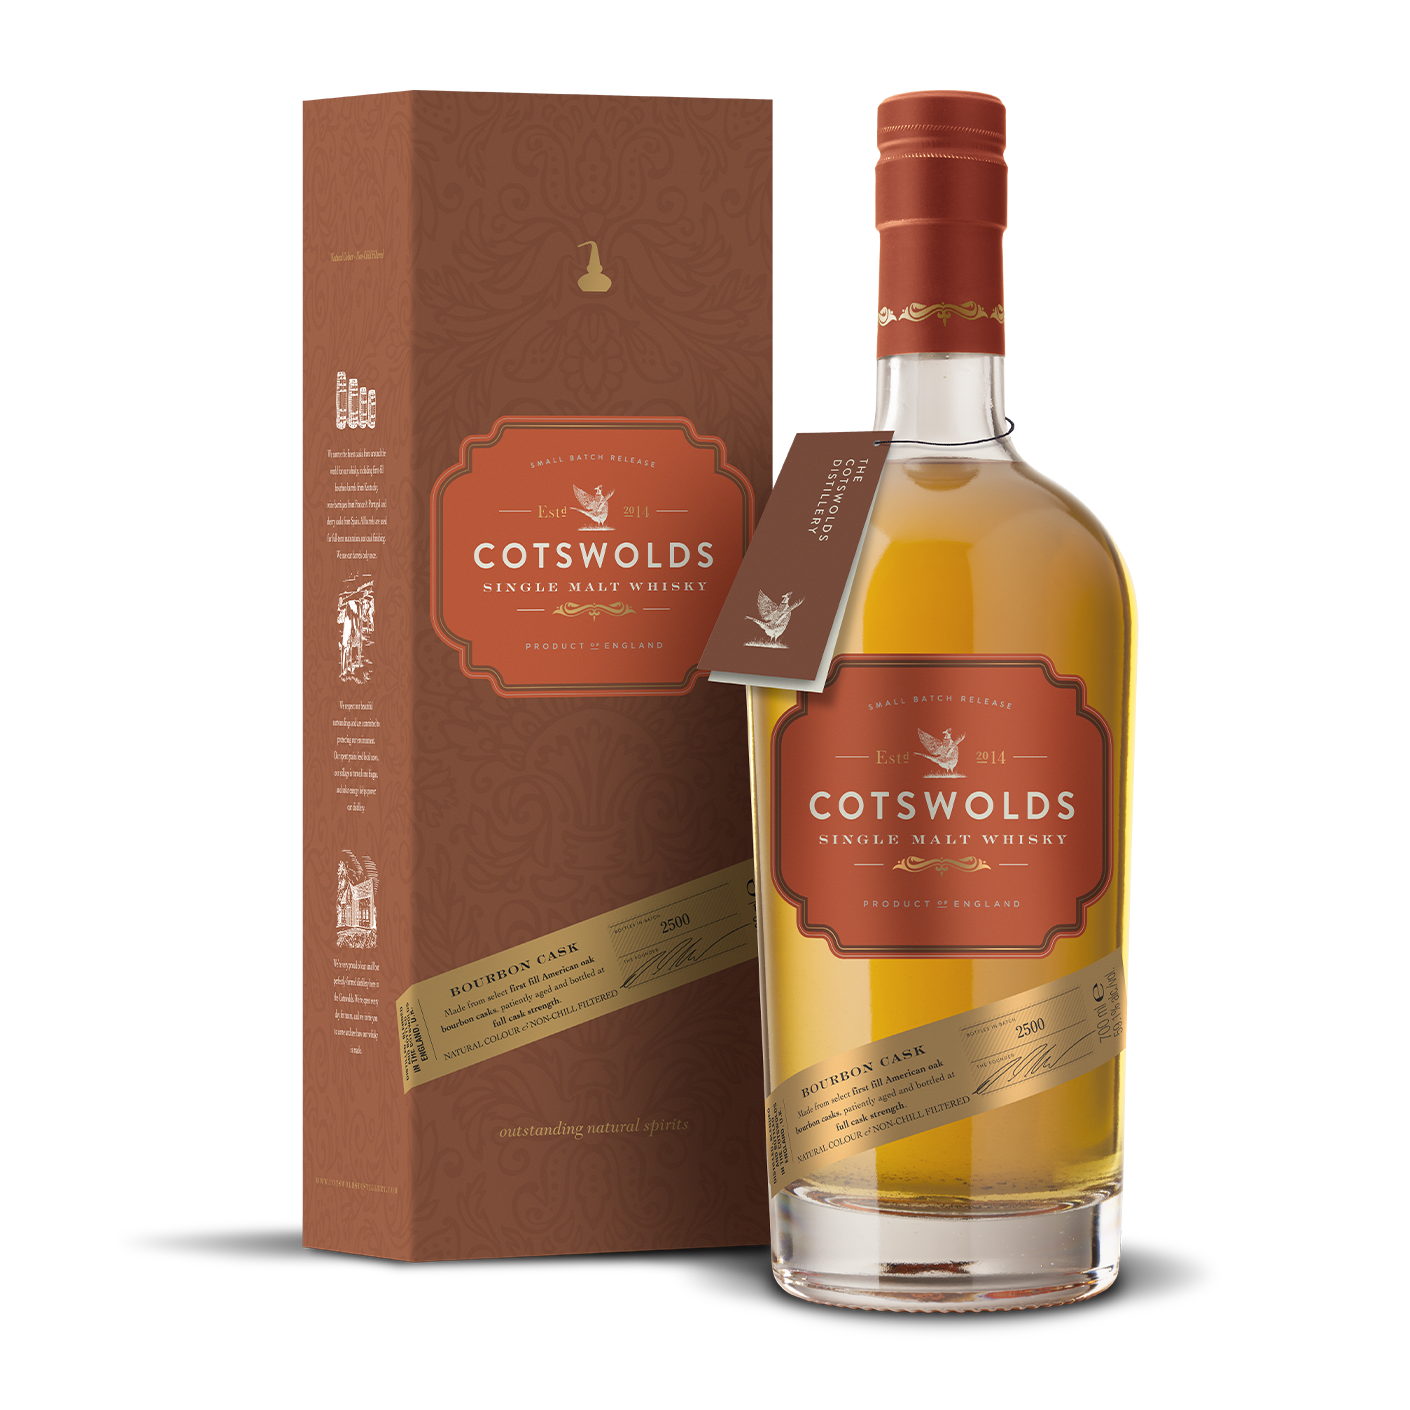 cotswolds bourbon cask single malt whisky bottle with gift box